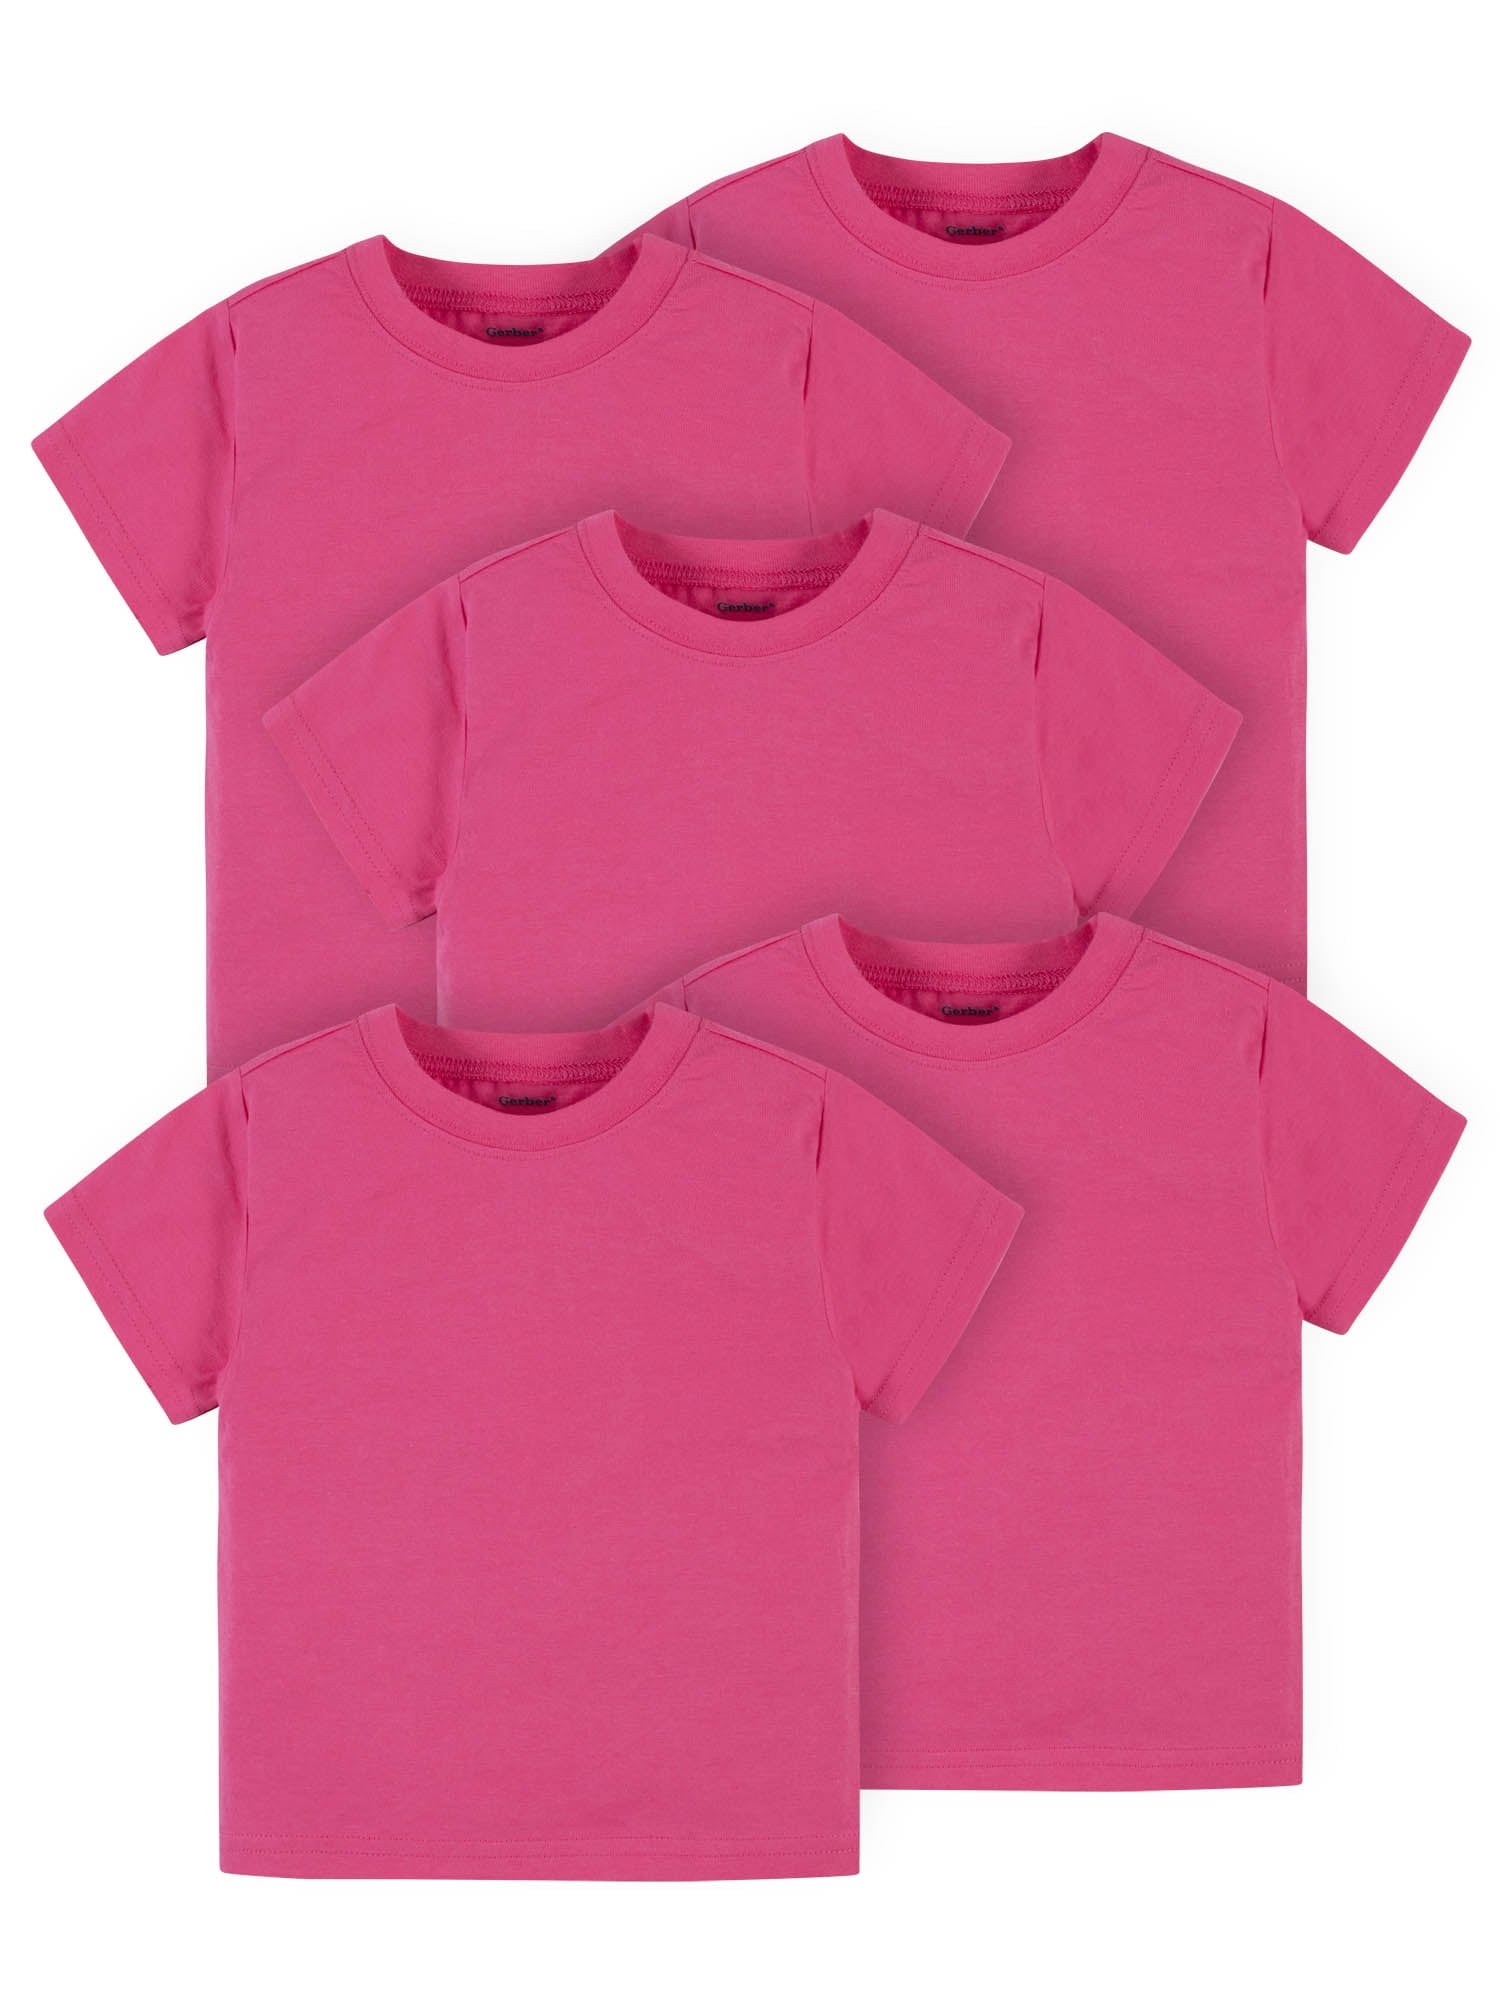 Veganism Unisex-Child T Shirt Baby Toddler Tee Round-Neck Short Sleeve Shirt